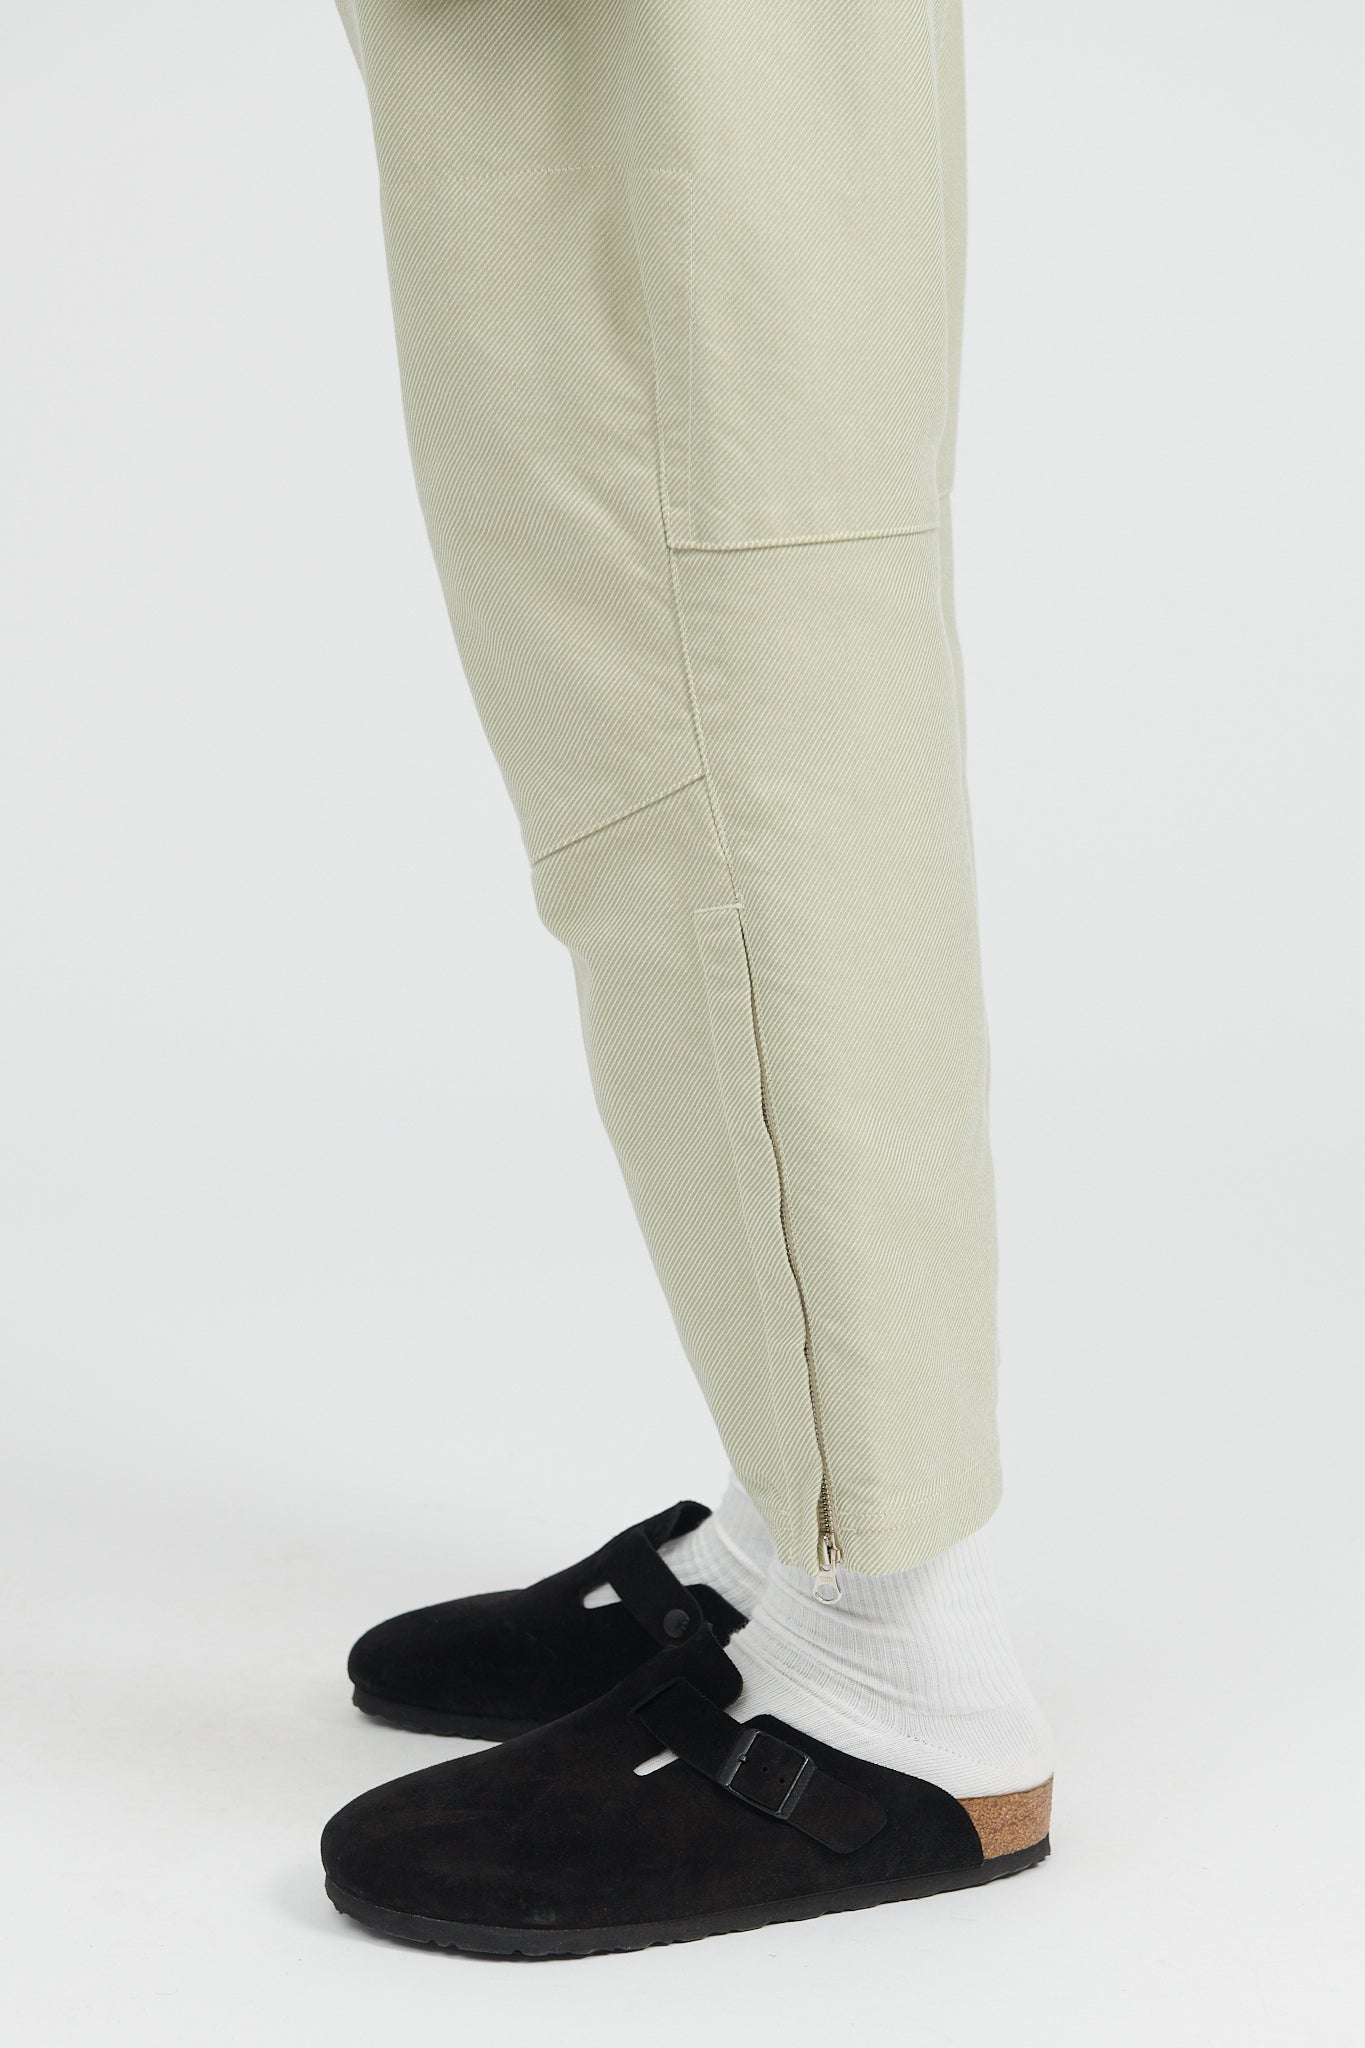 30515 Cotton Nylon Diagonal Weave Rider 5.5 Pocket Pants - Natural Beige